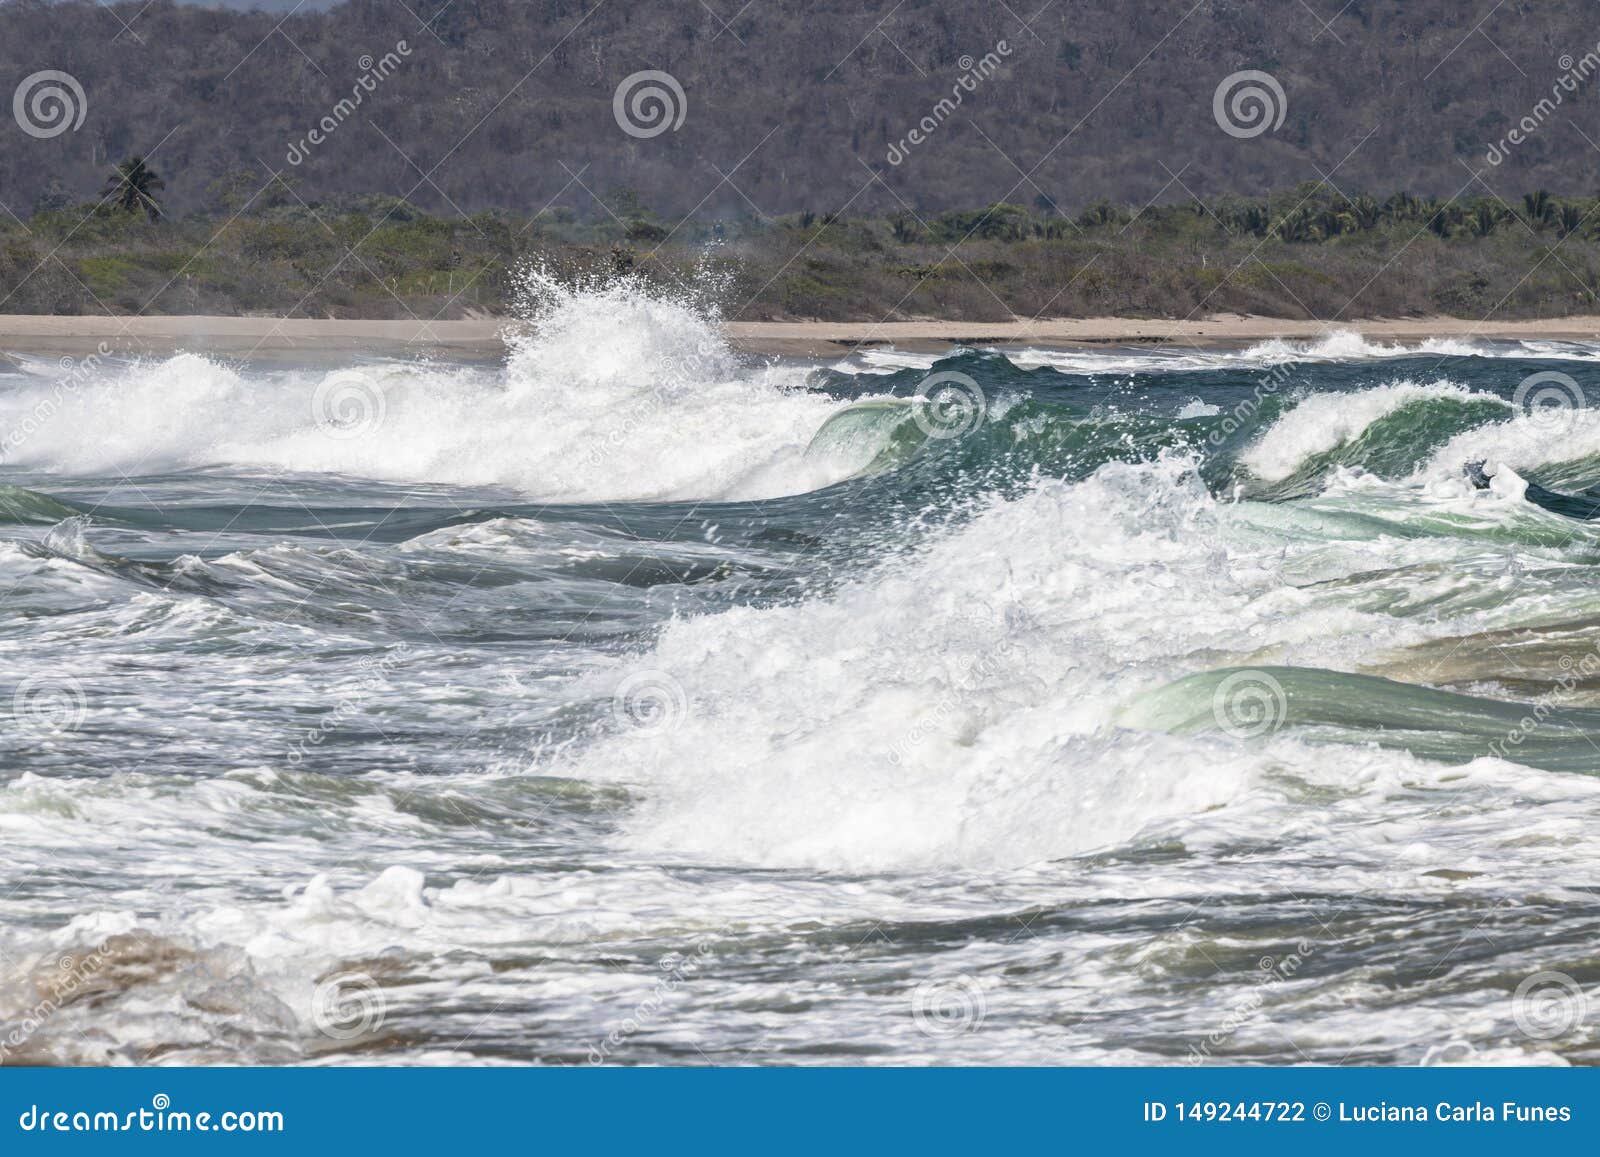 intense waves on the coast